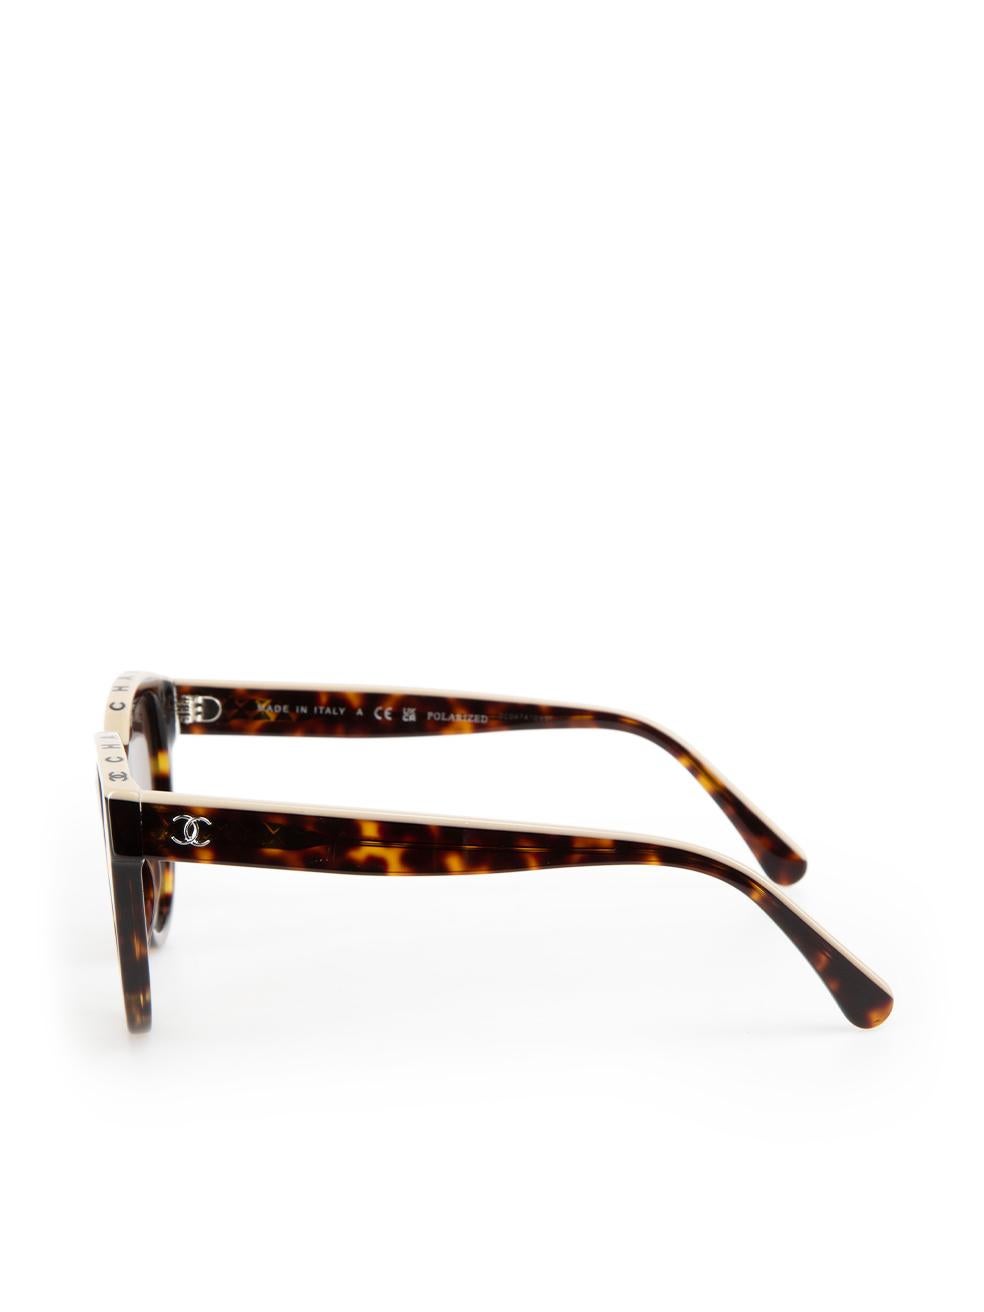 Chanel Dark Tortoise Butterfly Sunglasses For Sale 1